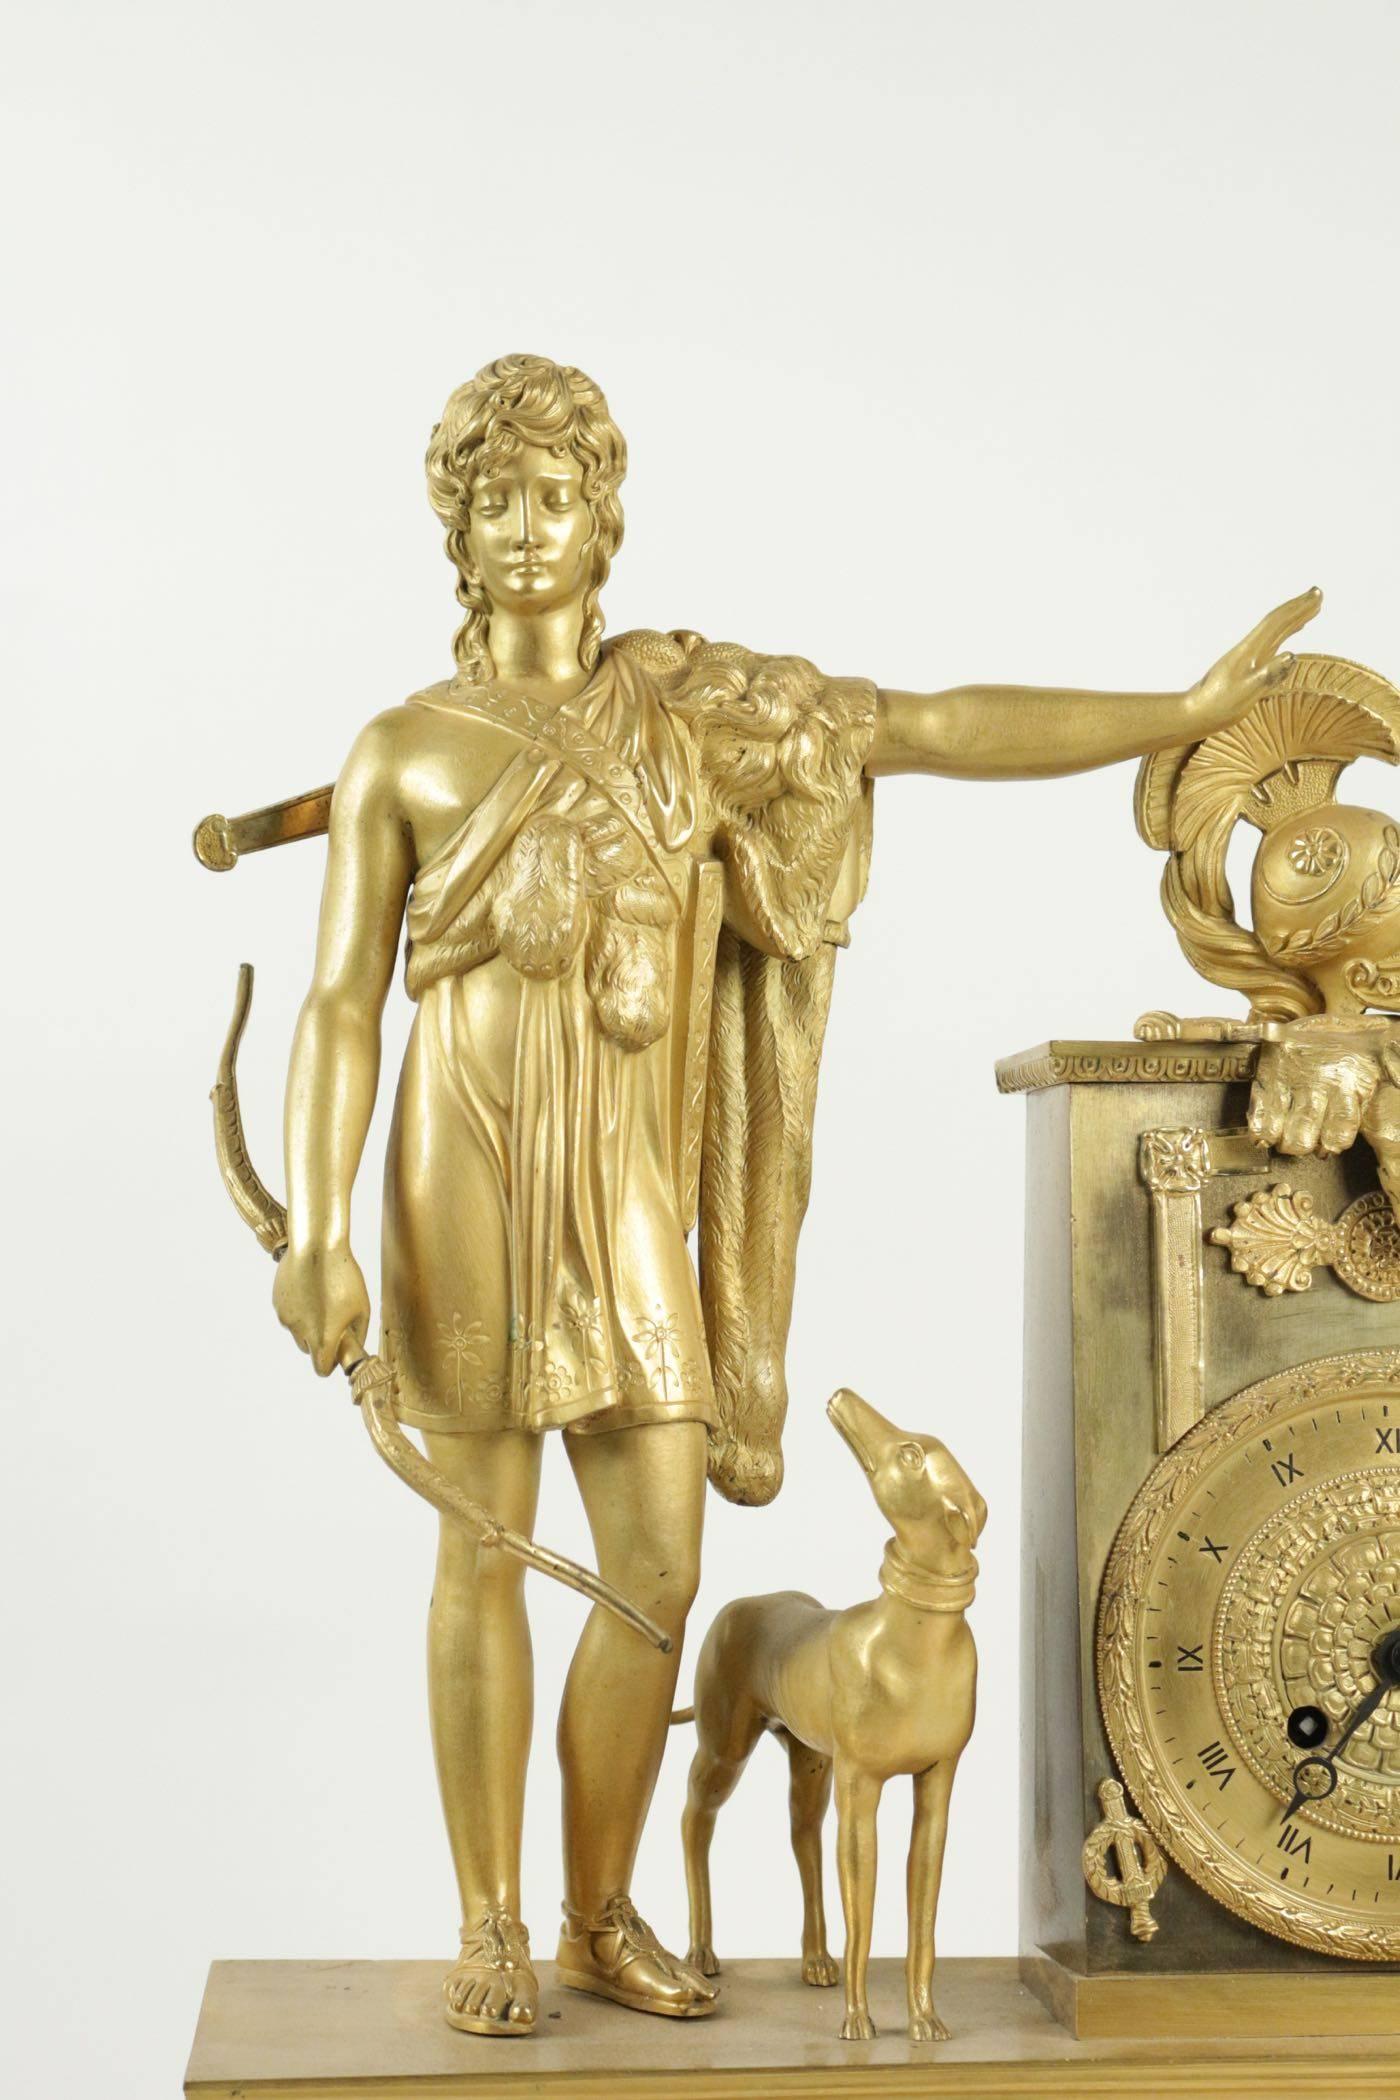 Empire clock from the 19th century in gold gilt bronze. 
Measure: L 39cm, H 54cm, P 13cm.